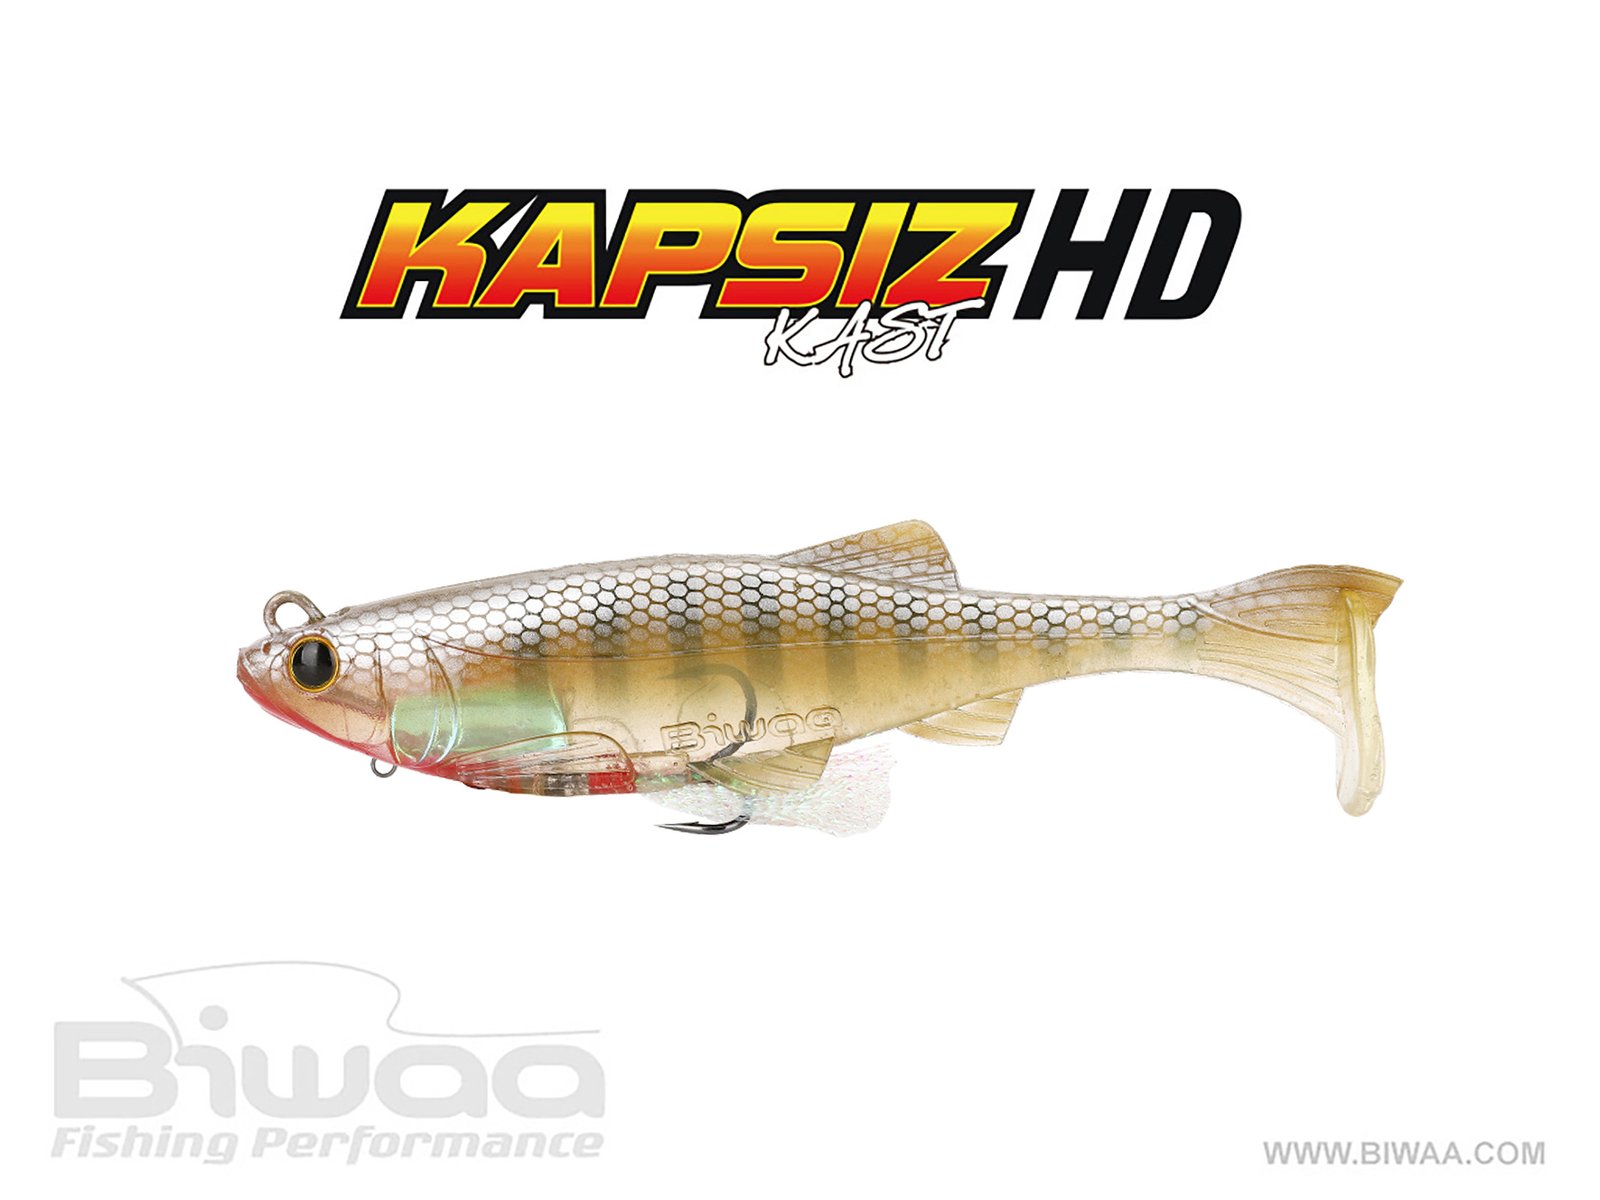 Kapsiz kast HD 9 - Biwaa Fishing Performance - pro fishing shop for the  best innovative fishing lures & fishing gear